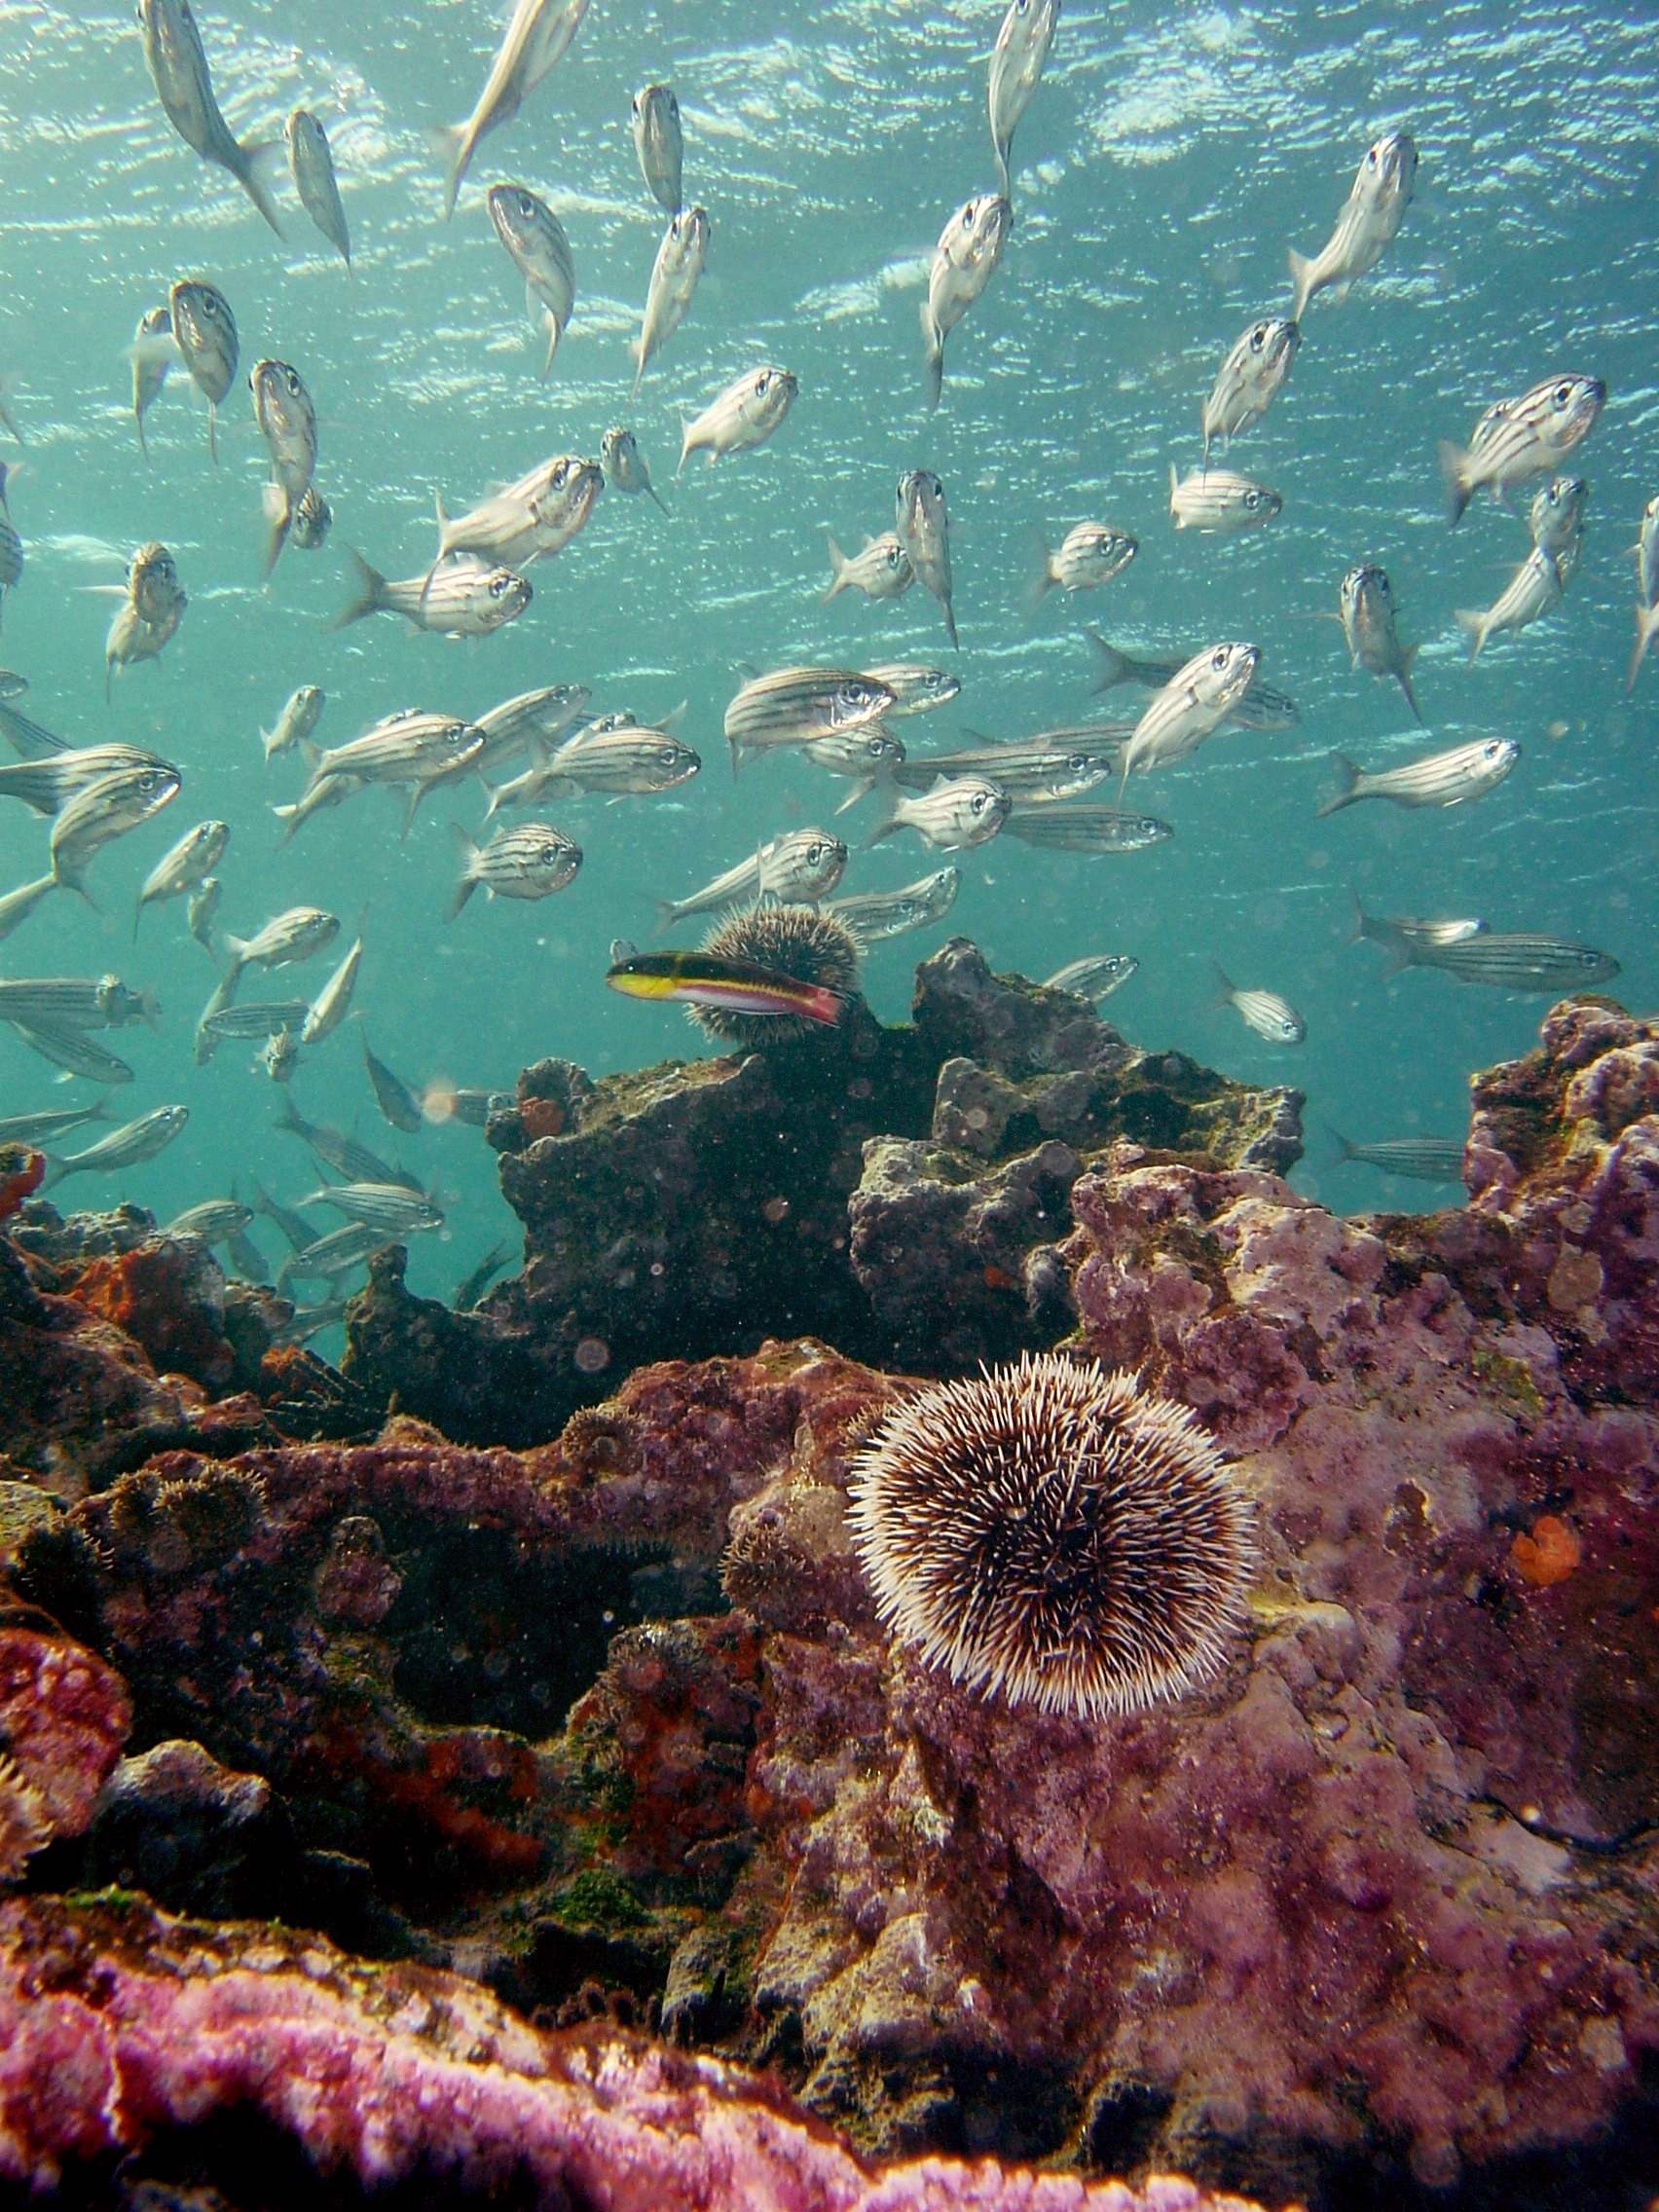 Galapagos Islands Underwater scenery